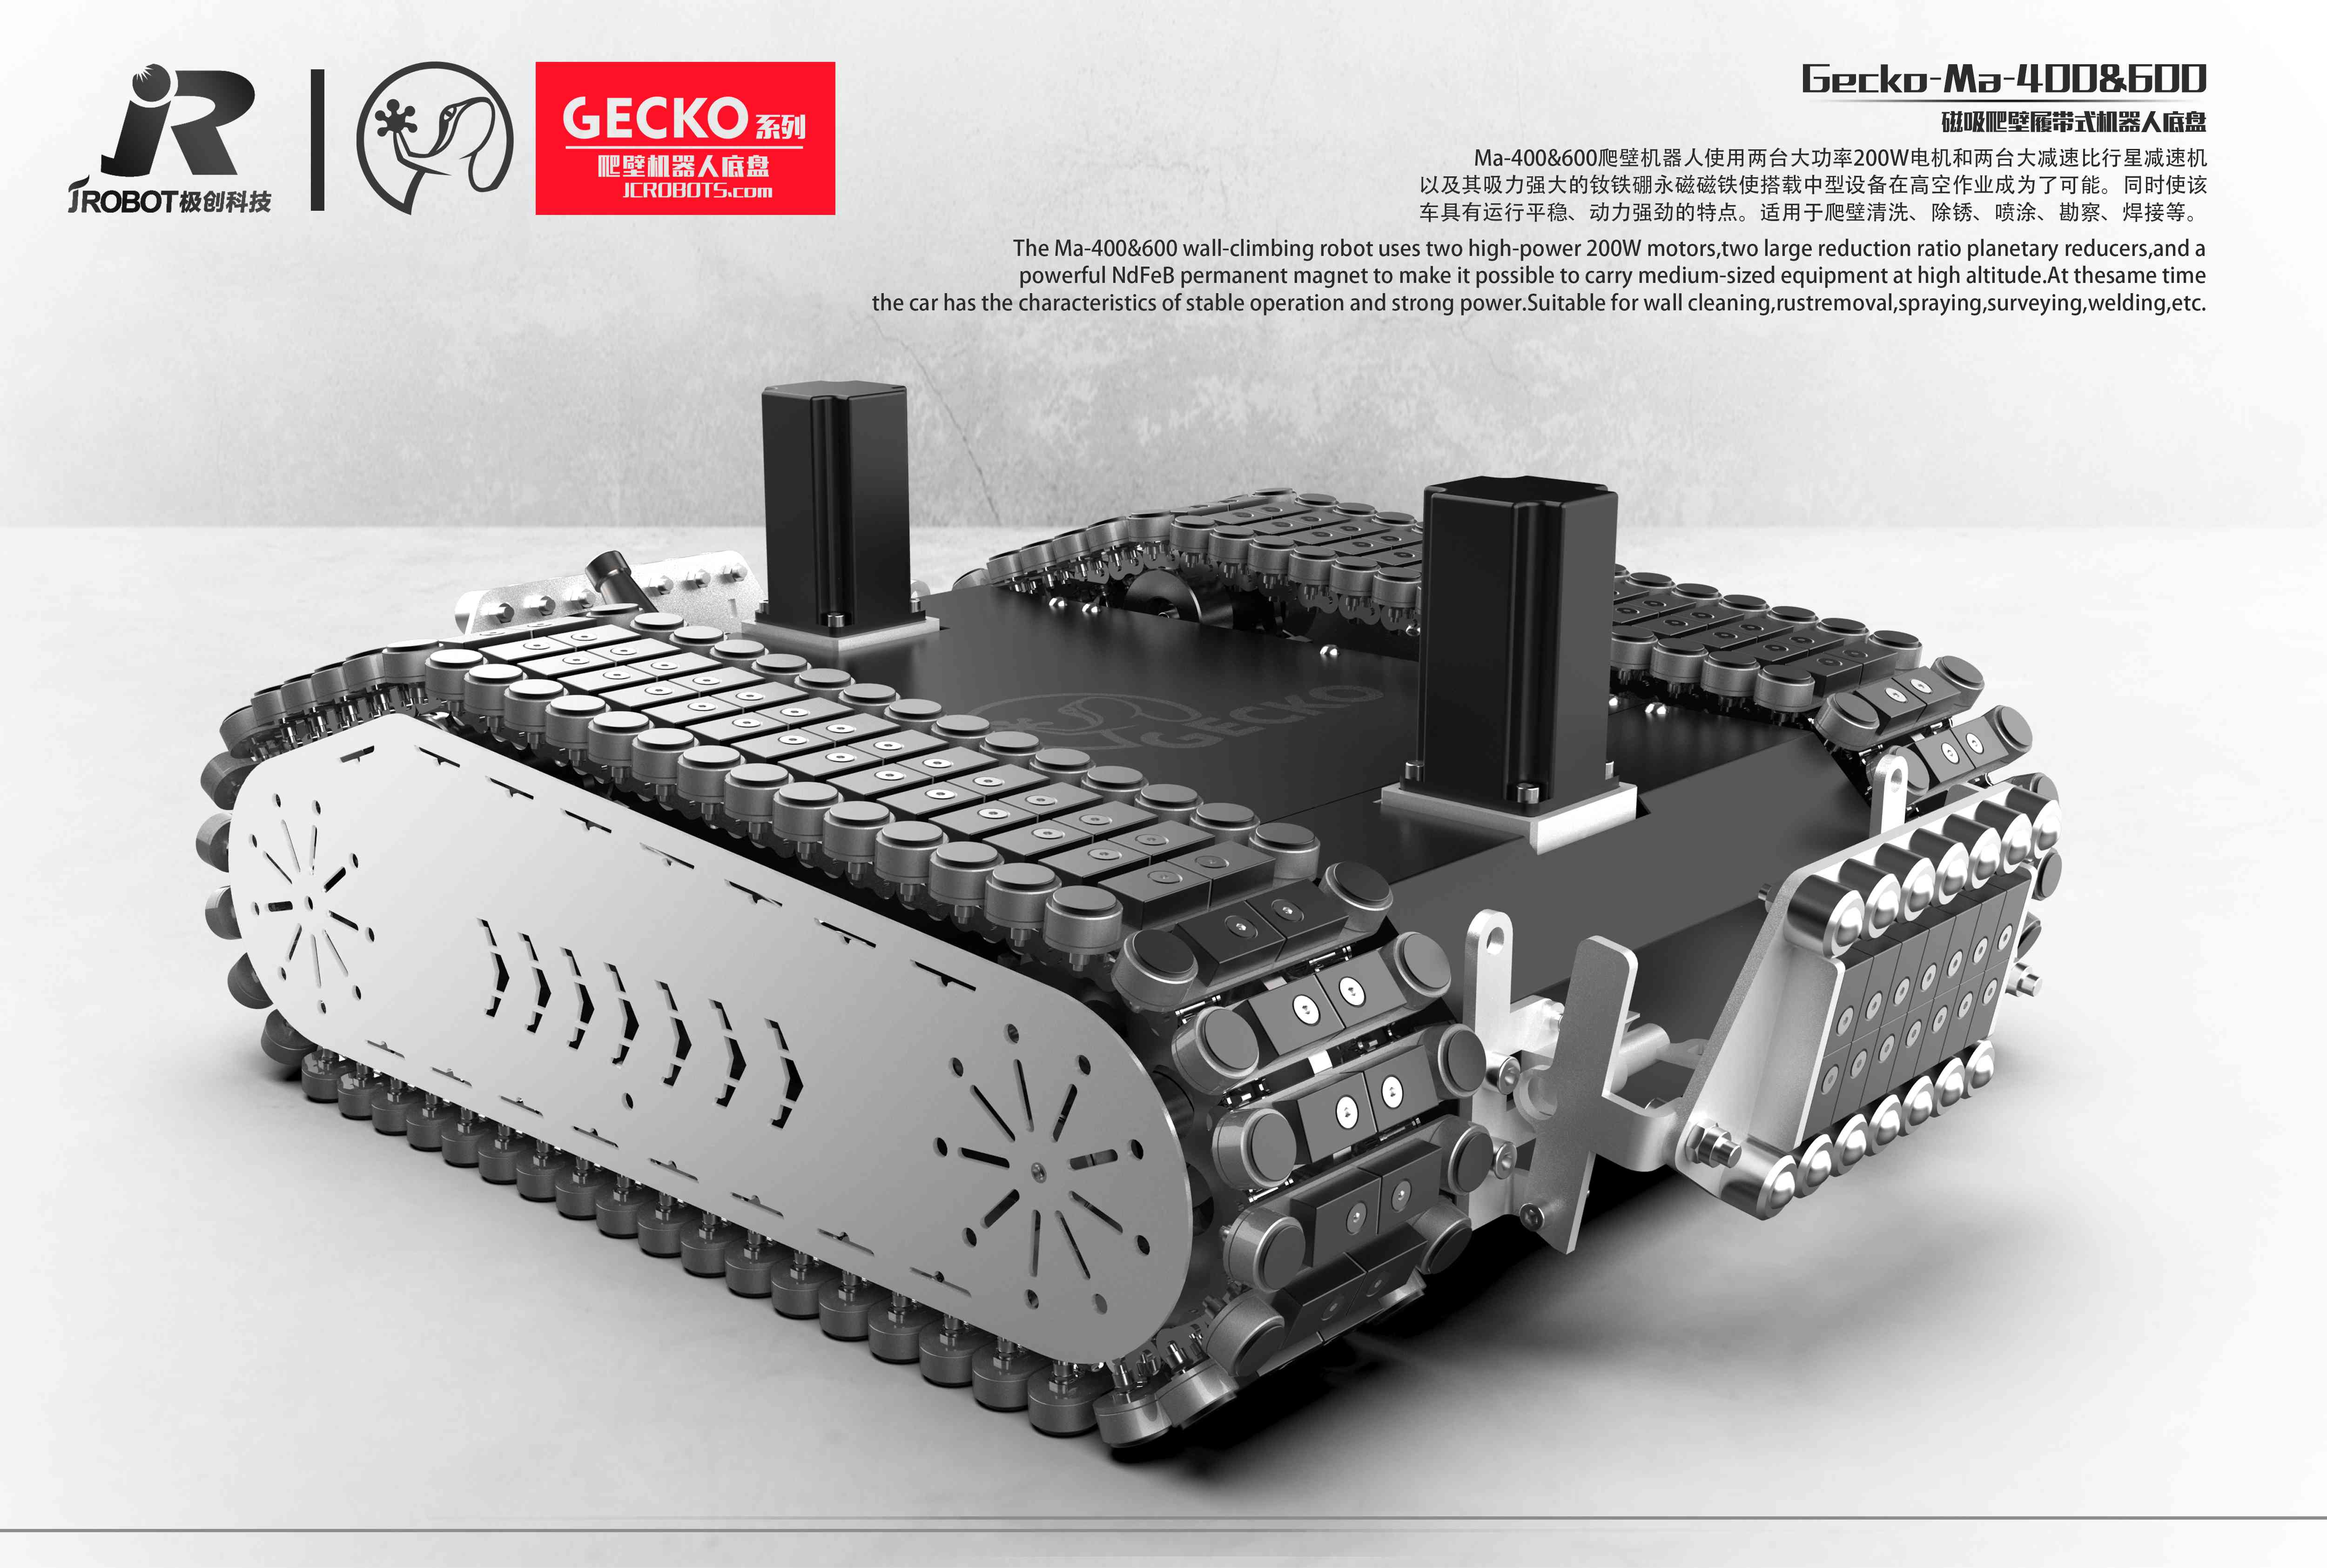 Gecko-Ma-400&600-海报 - 副本_compressed.jpg